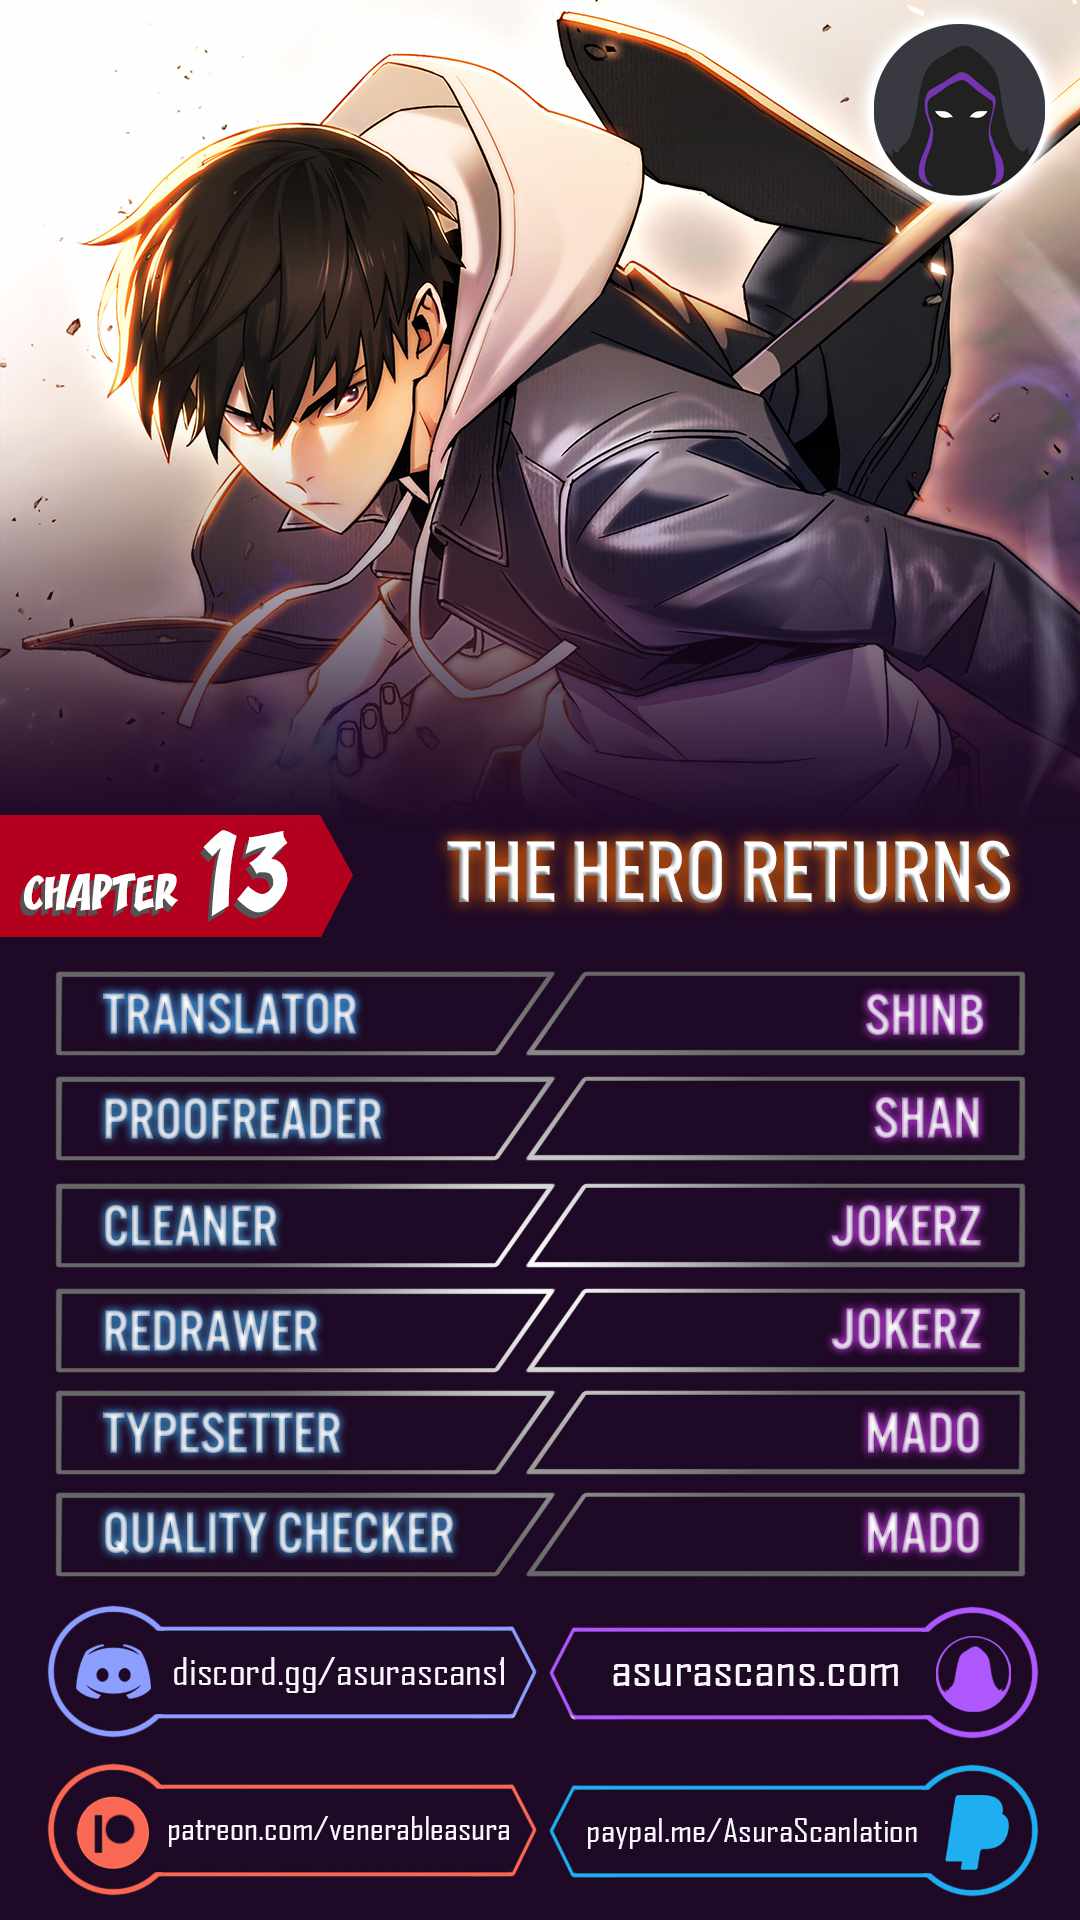 The Hero Returns chapter 13